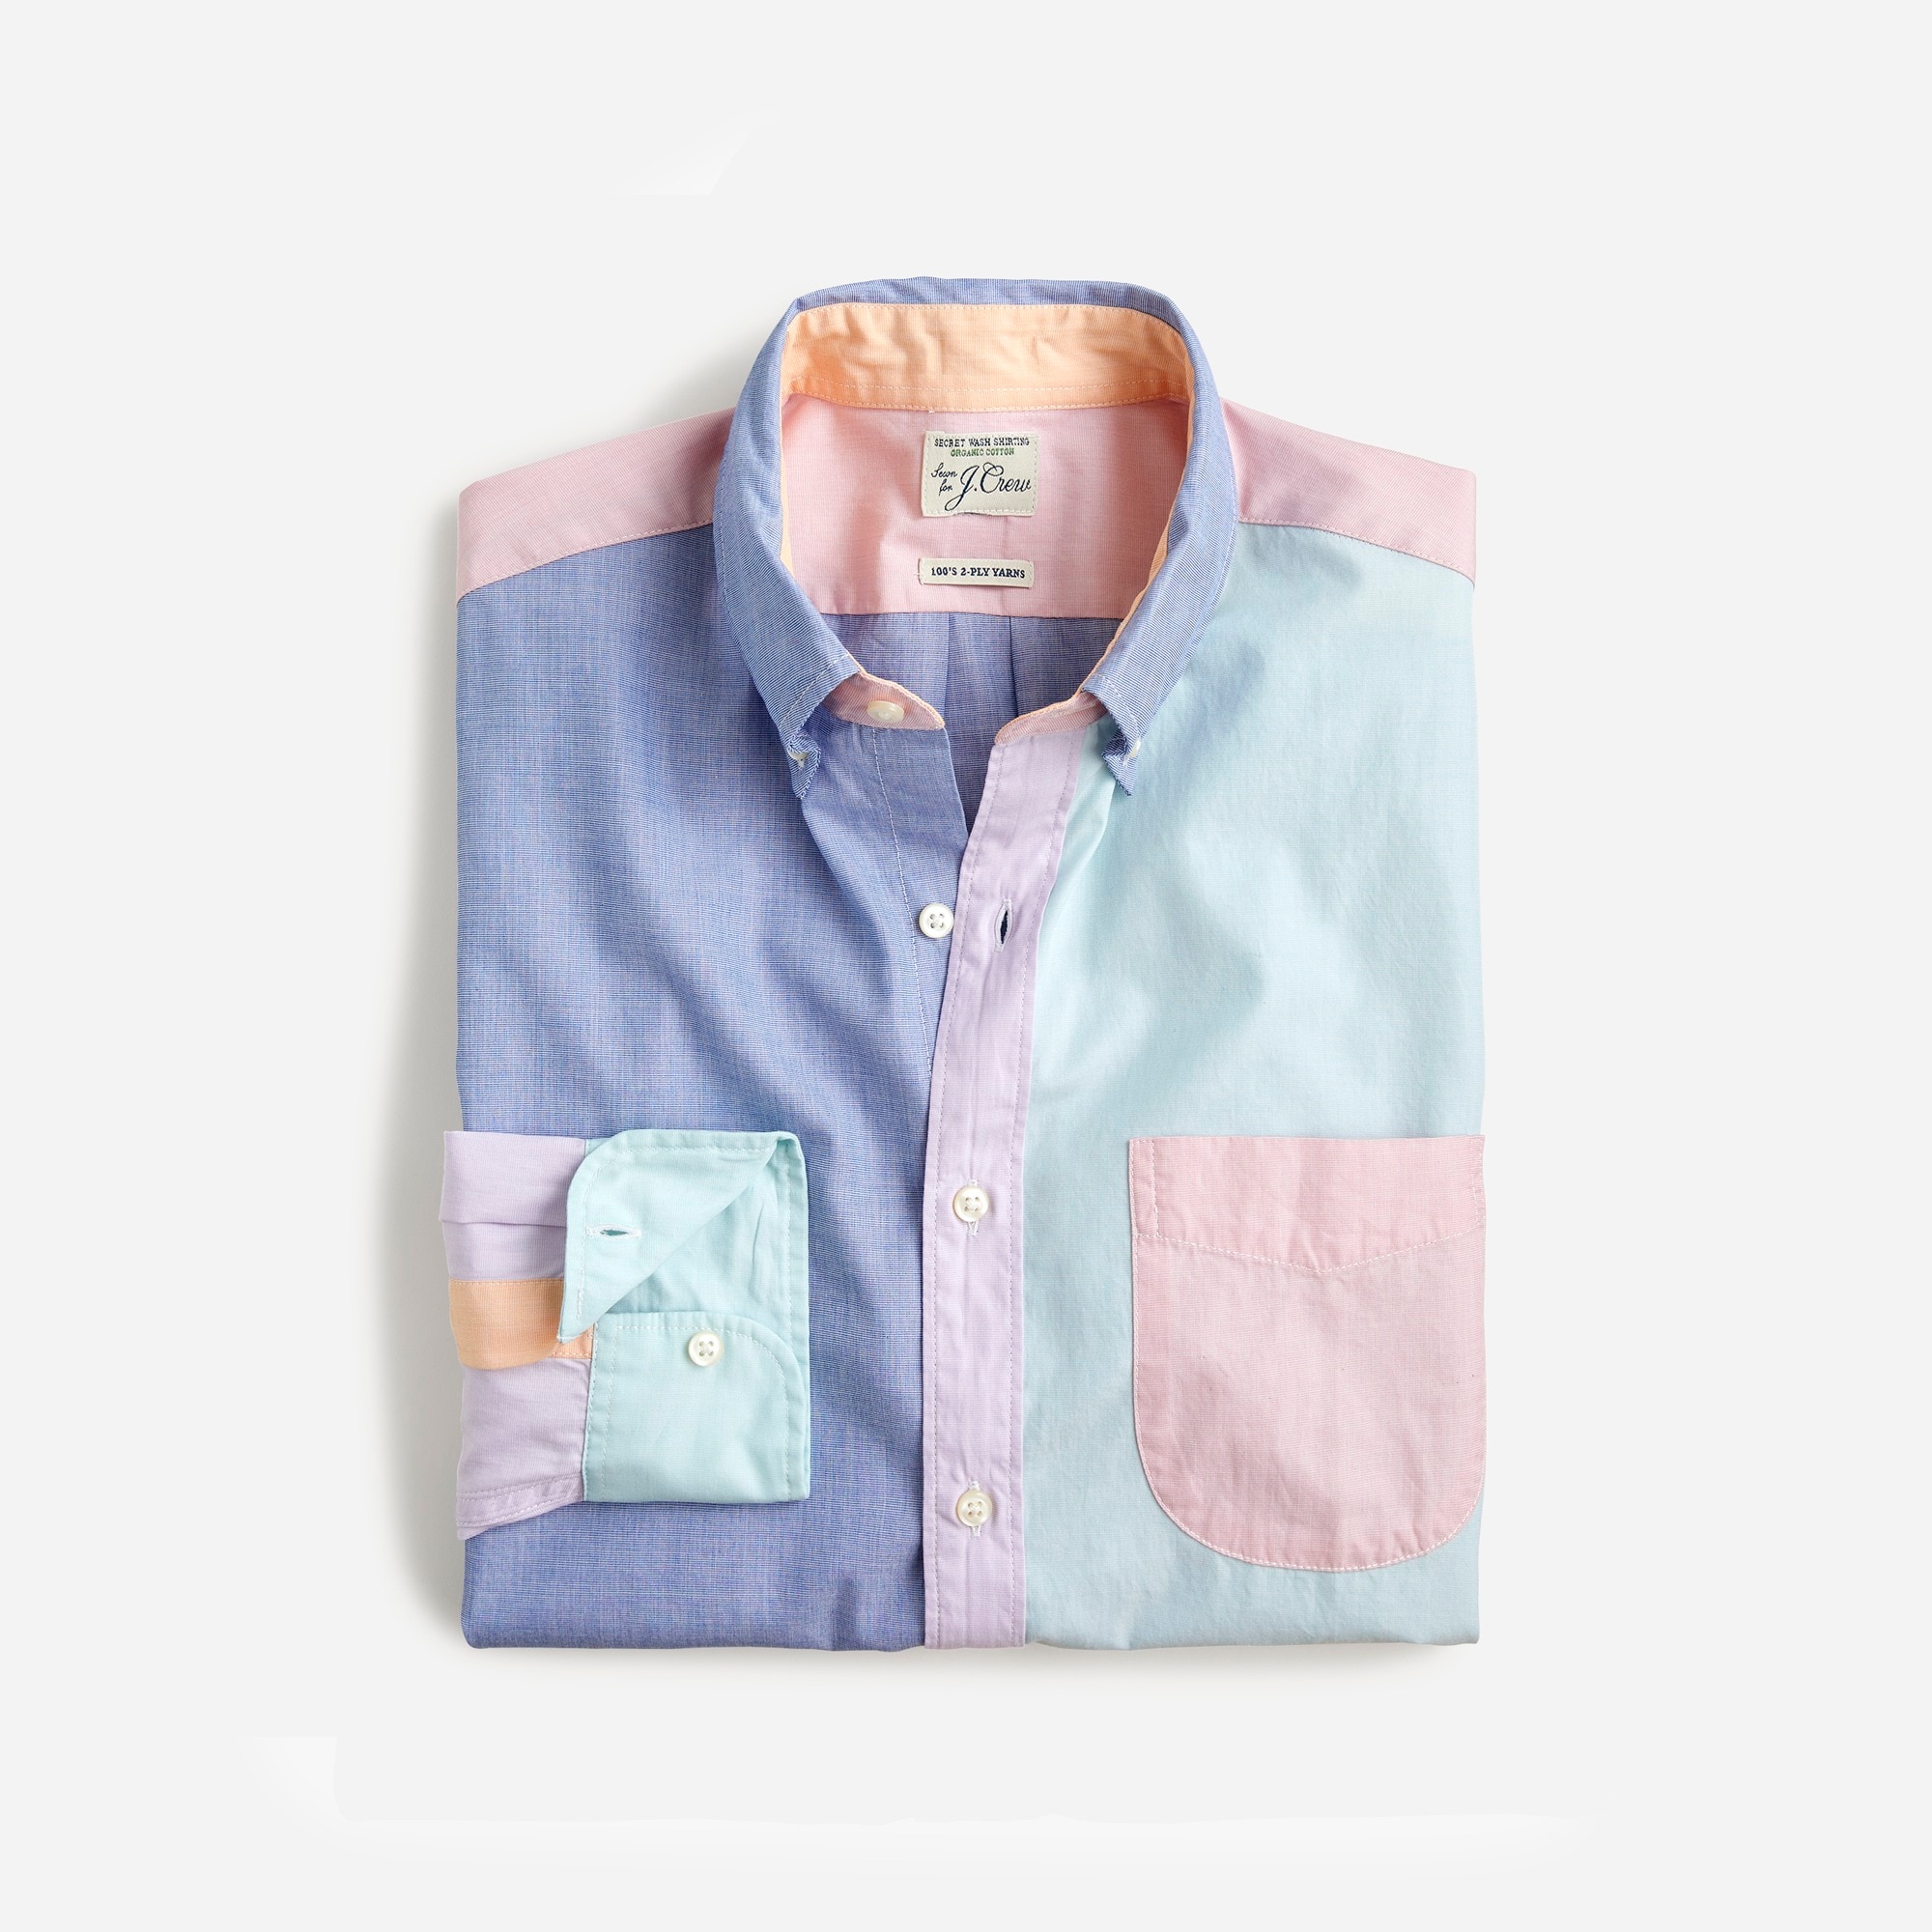 Jcrew Slim Secret Wash organic cotton poplin shirt